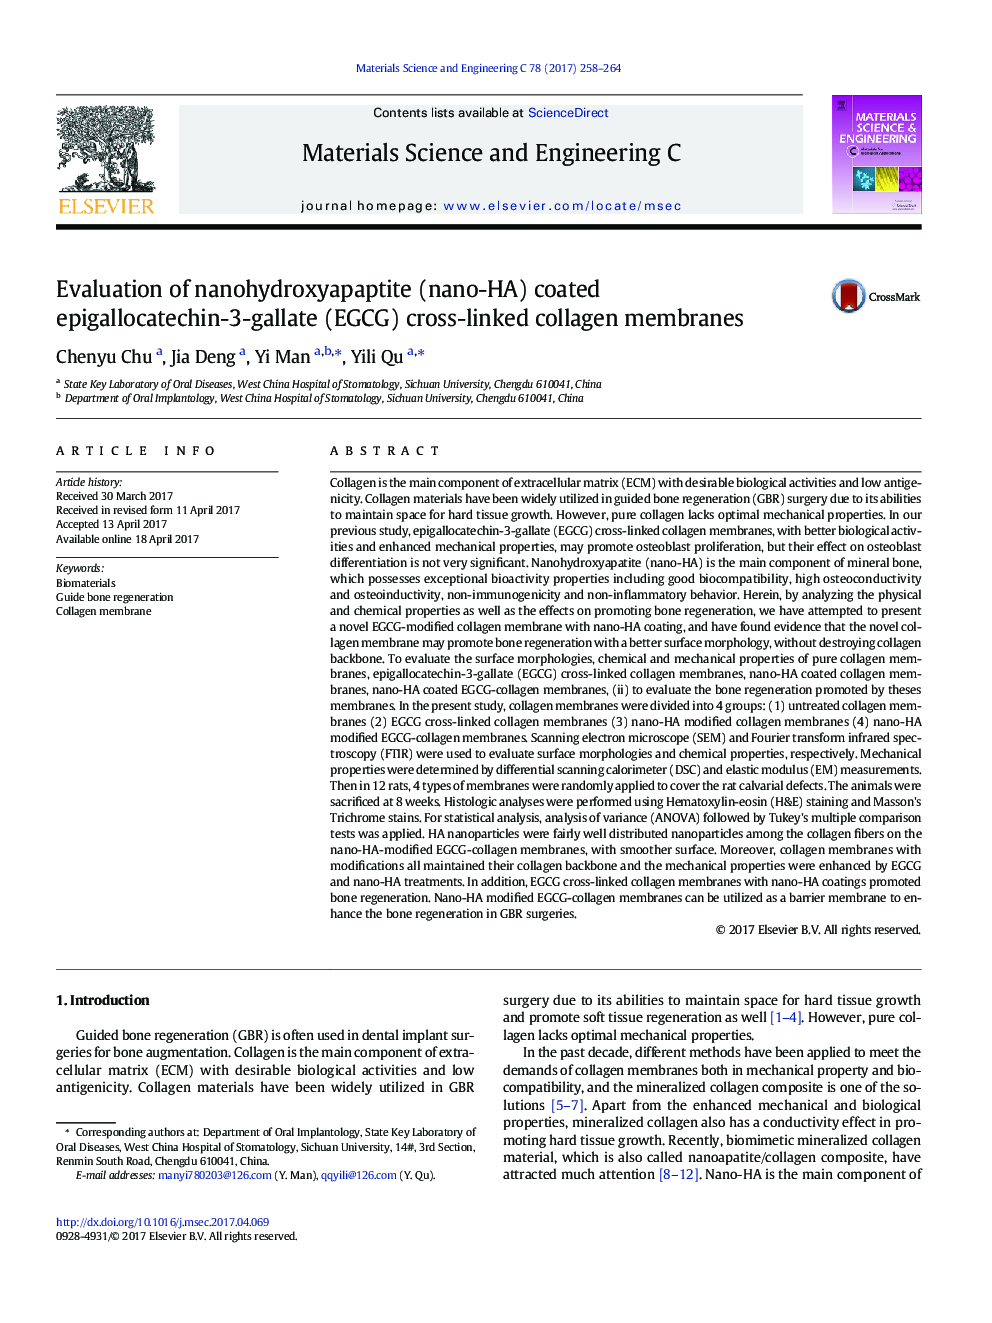 Evaluation of nanohydroxyapaptite (nano-HA) coated epigallocatechin-3-gallate (EGCG) cross-linked collagen membranes